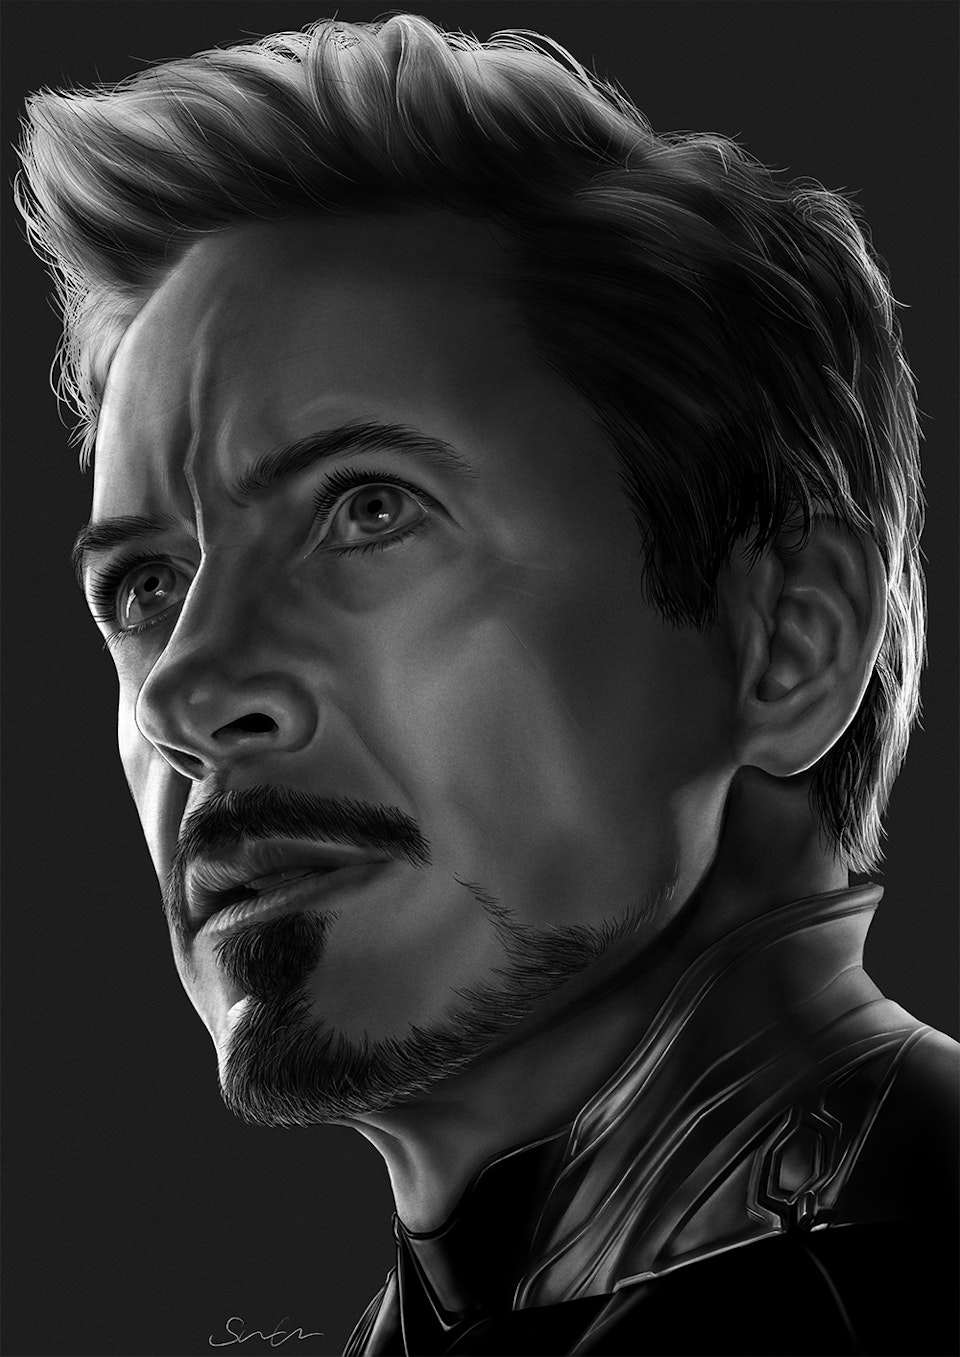 Black and White Character Portraits - Tony Stark - Iron Man